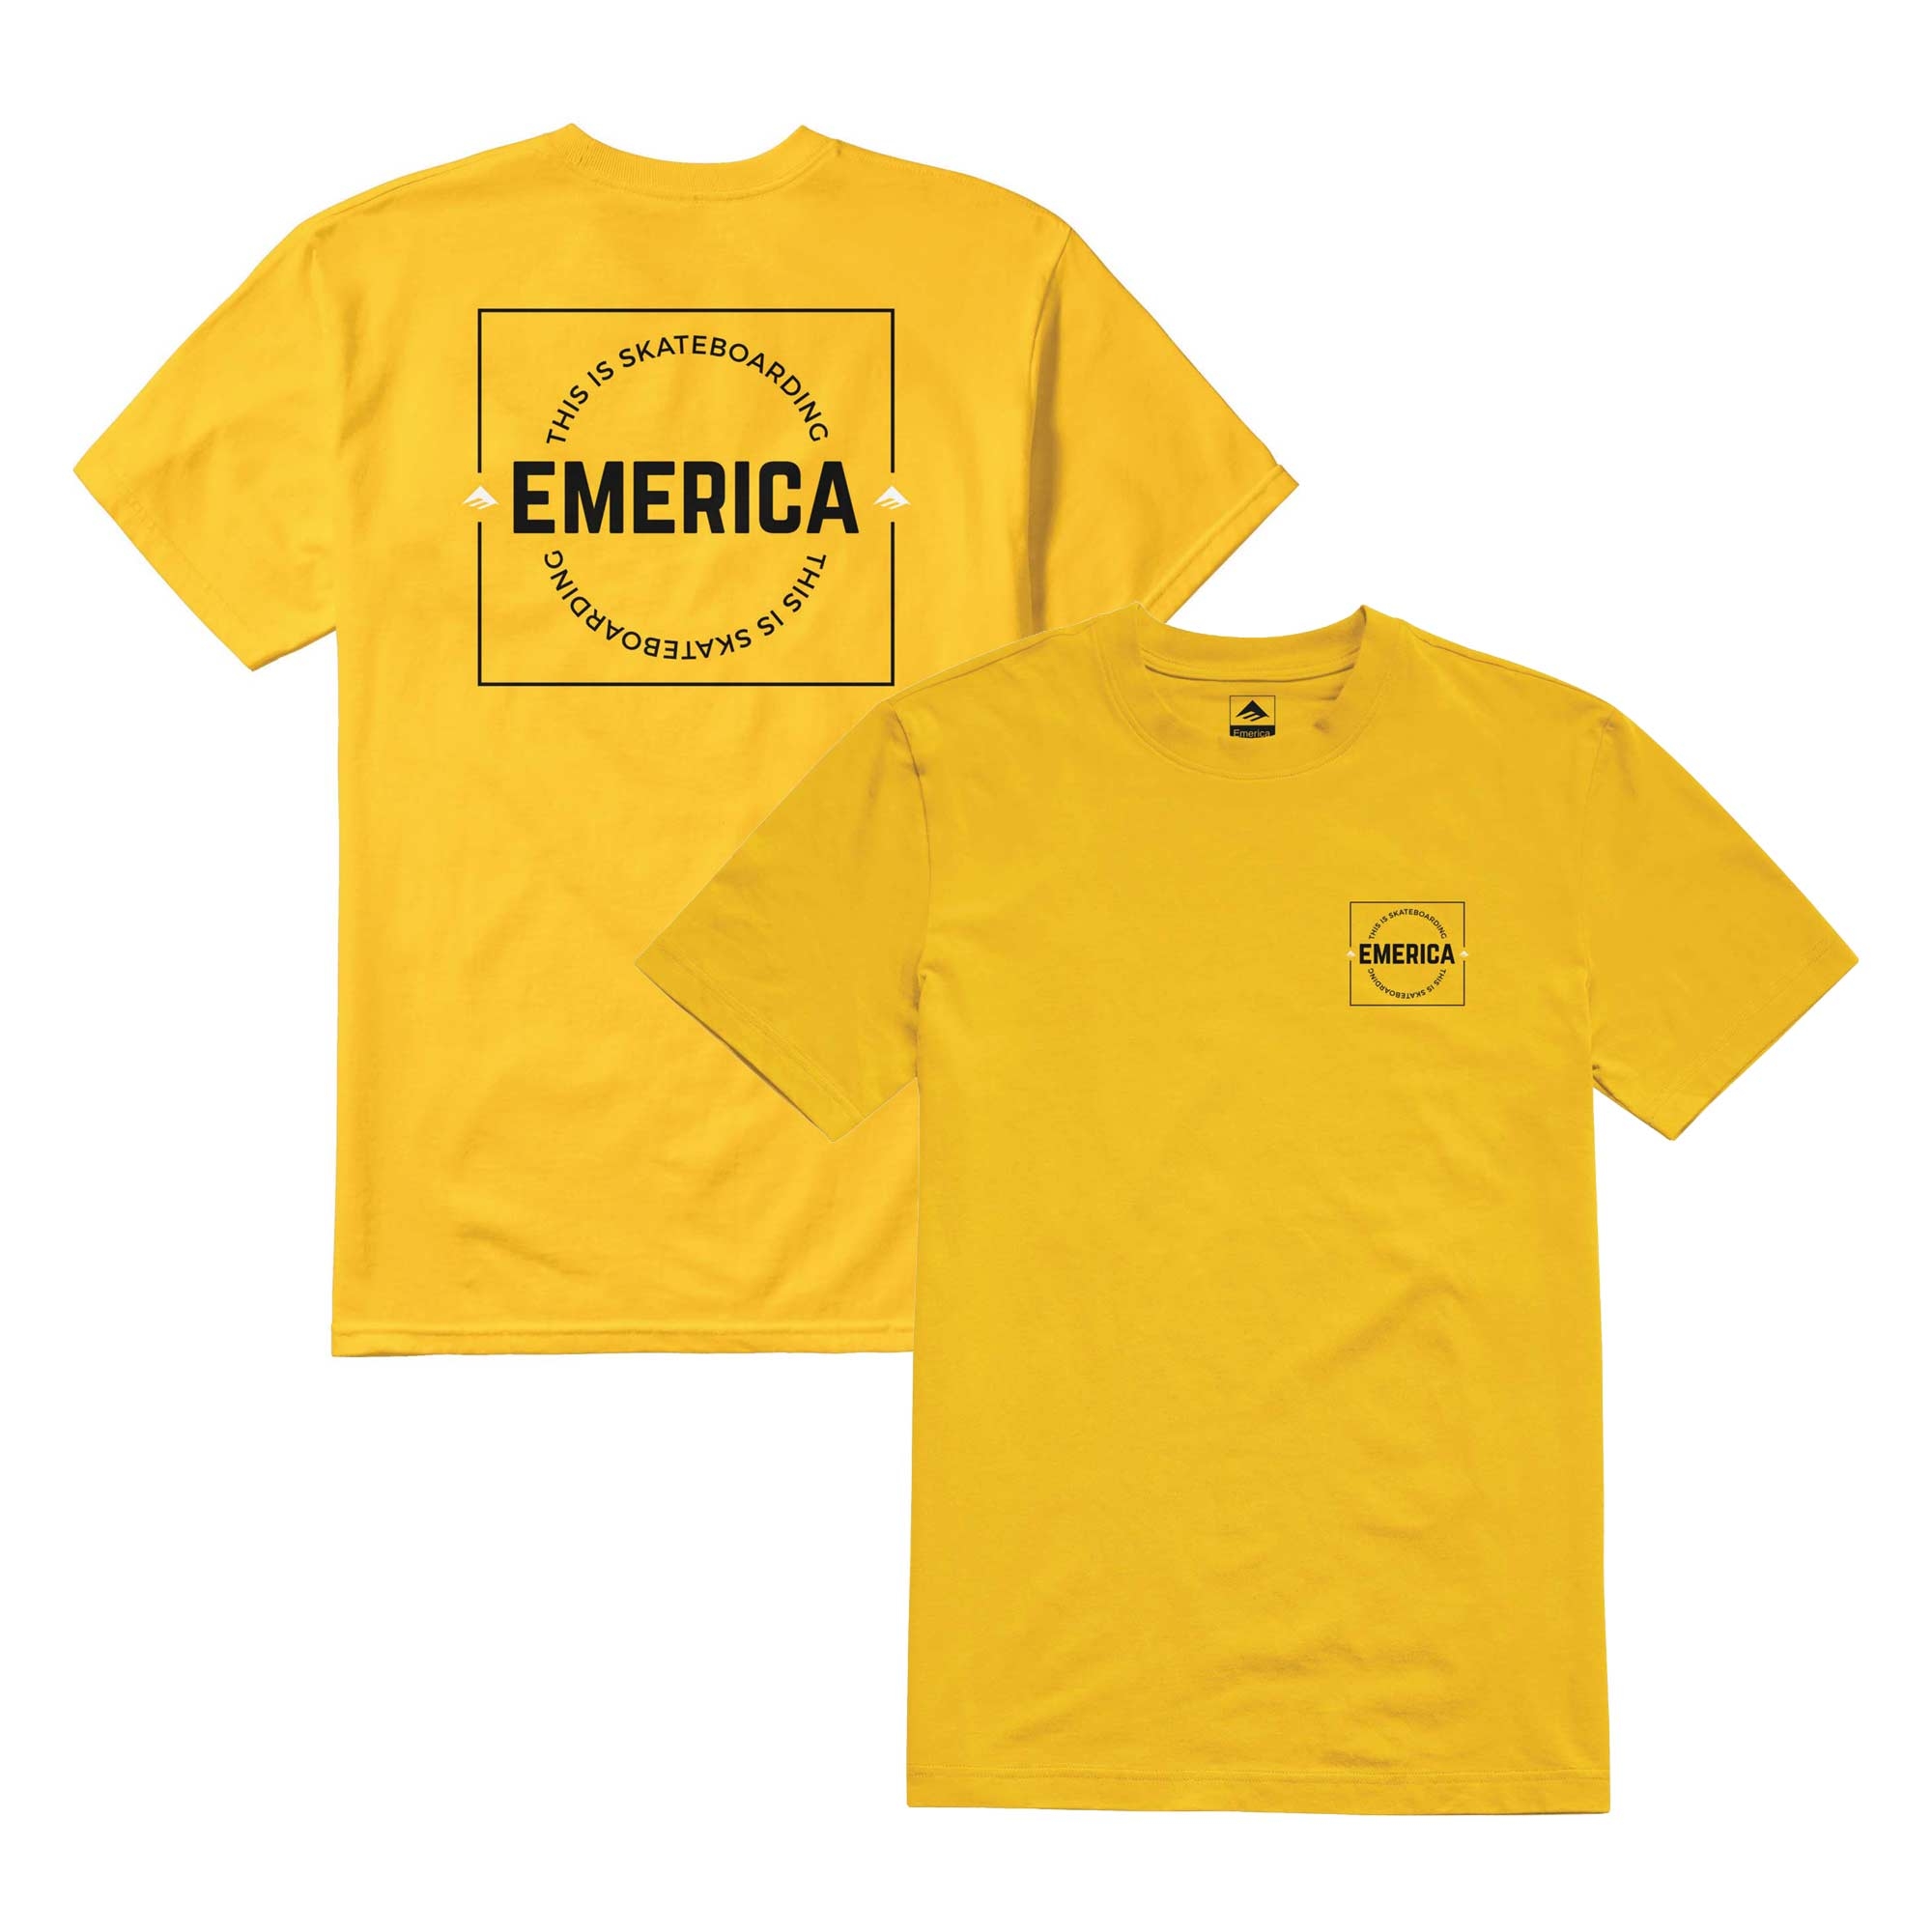 EMERICA T-Shirt STATEMENT gold